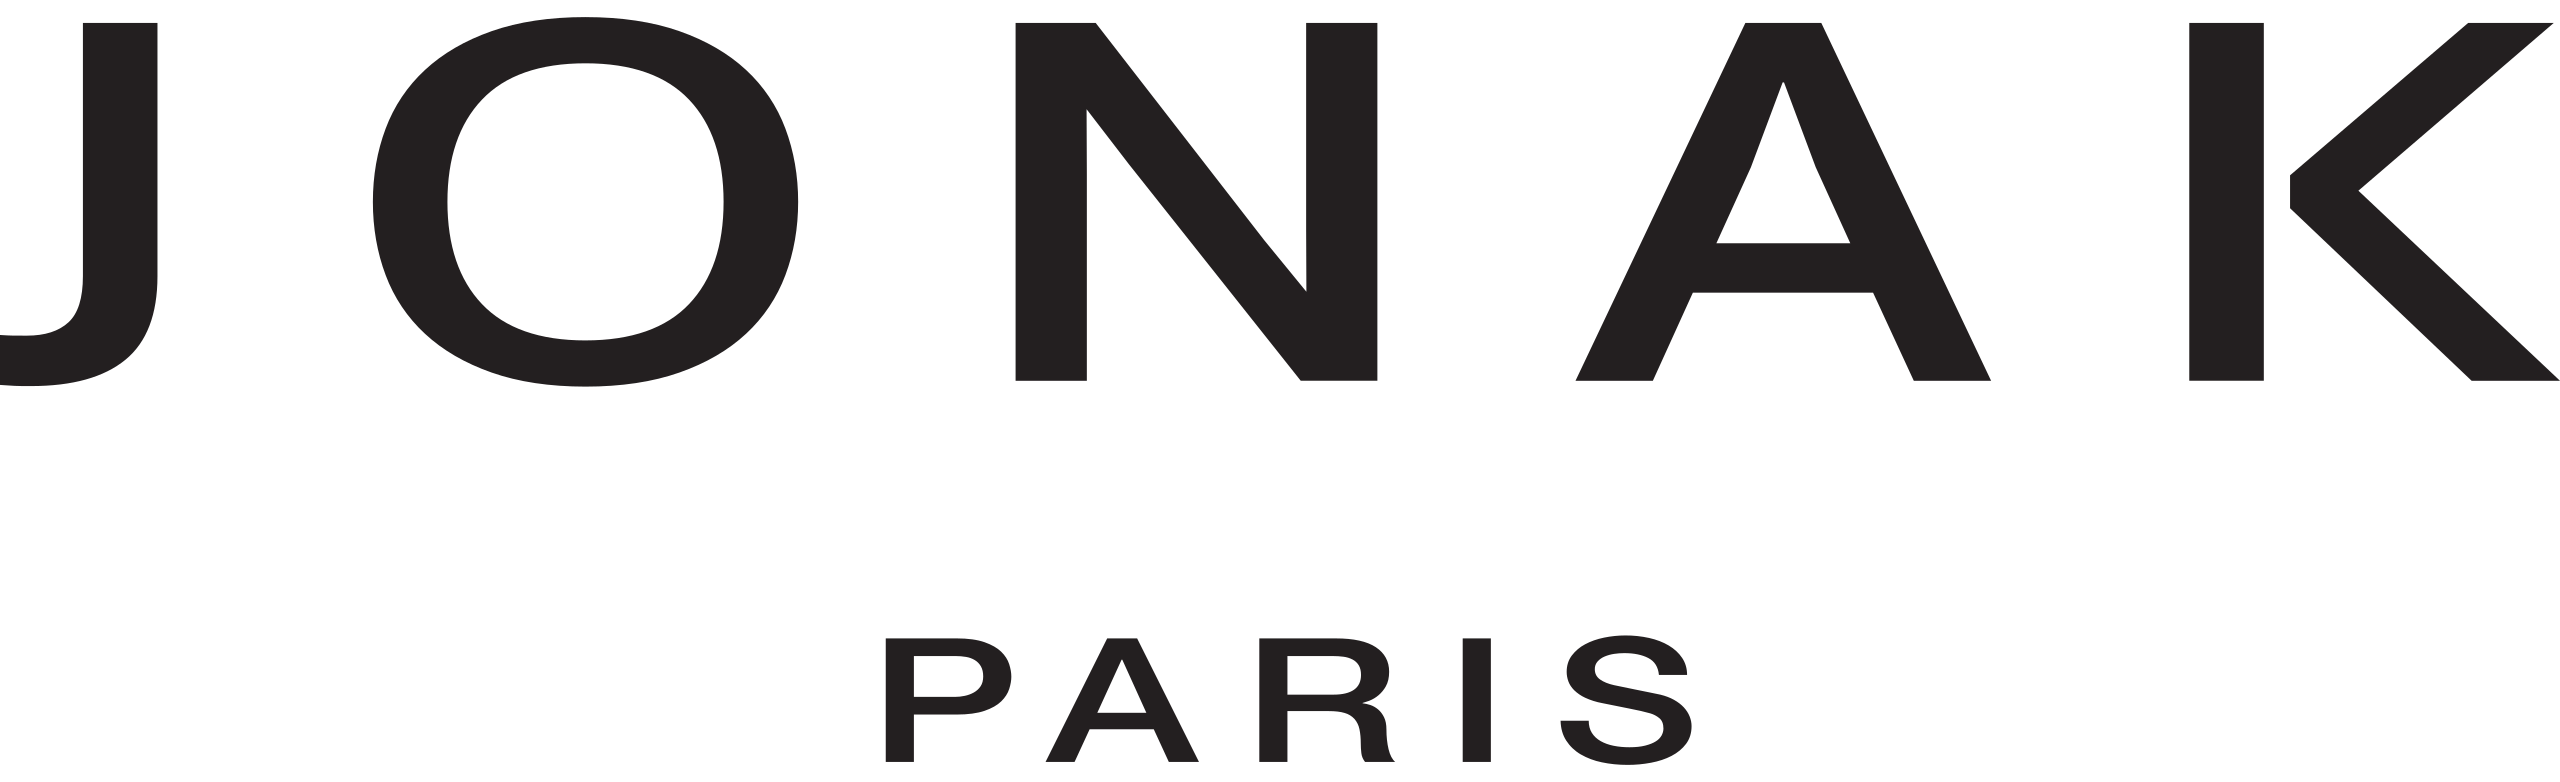 logotipo del archivo - Jonak